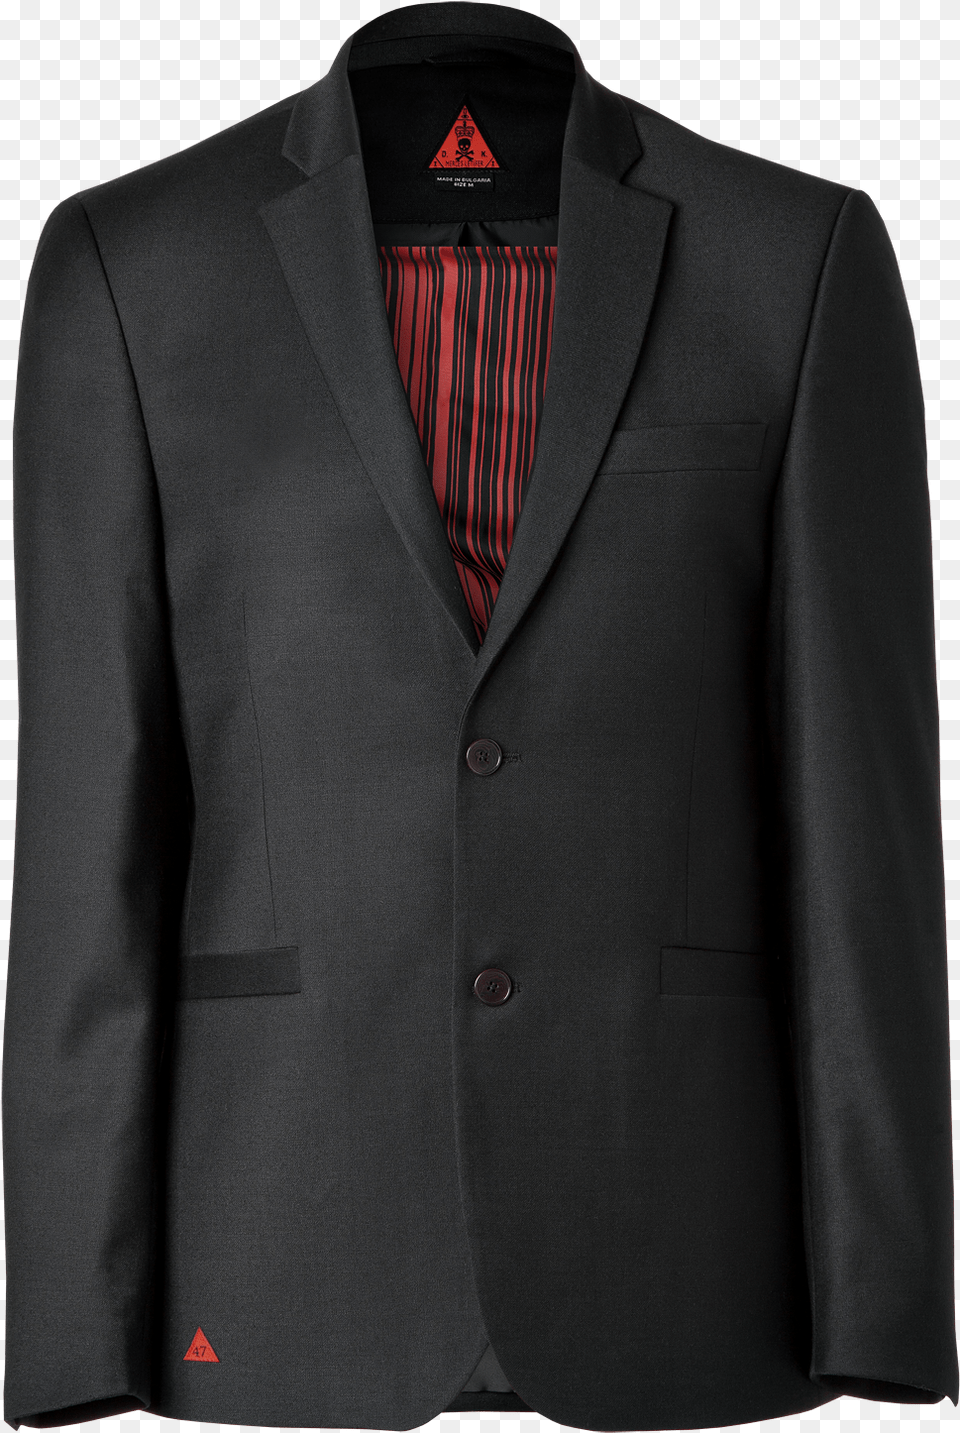 Agent 47 Jacket By Formal Wear, Blazer, Clothing, Coat, Formal Wear Free Transparent Png